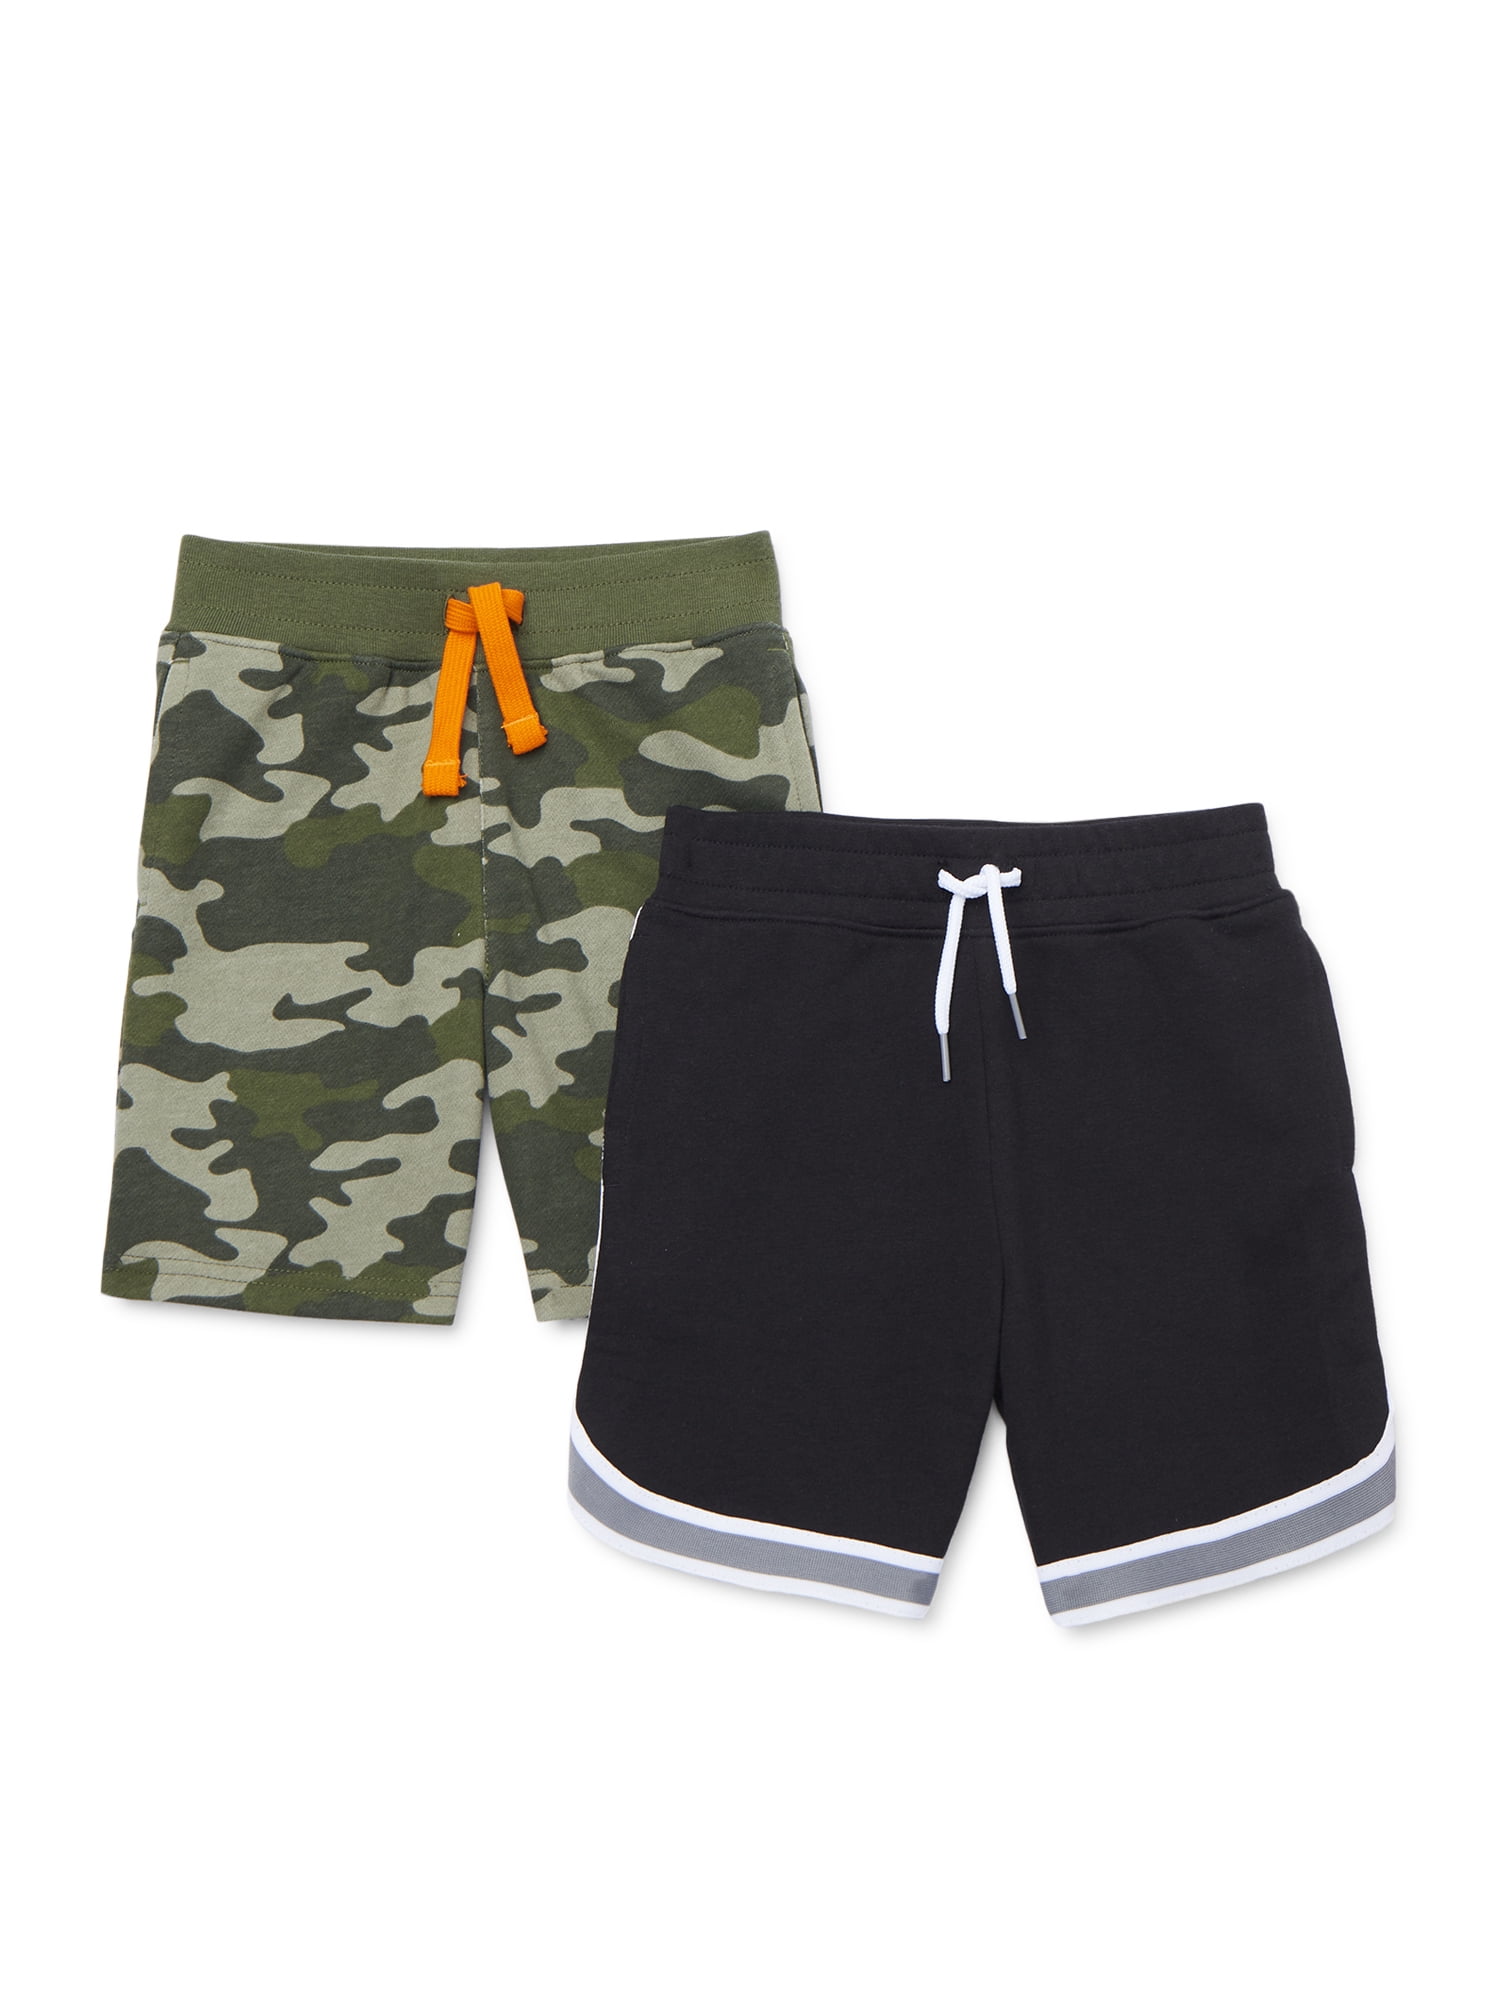 Tan Gray or Green Garanimals Boy's Toddler Shorts in Camoflauge Colors